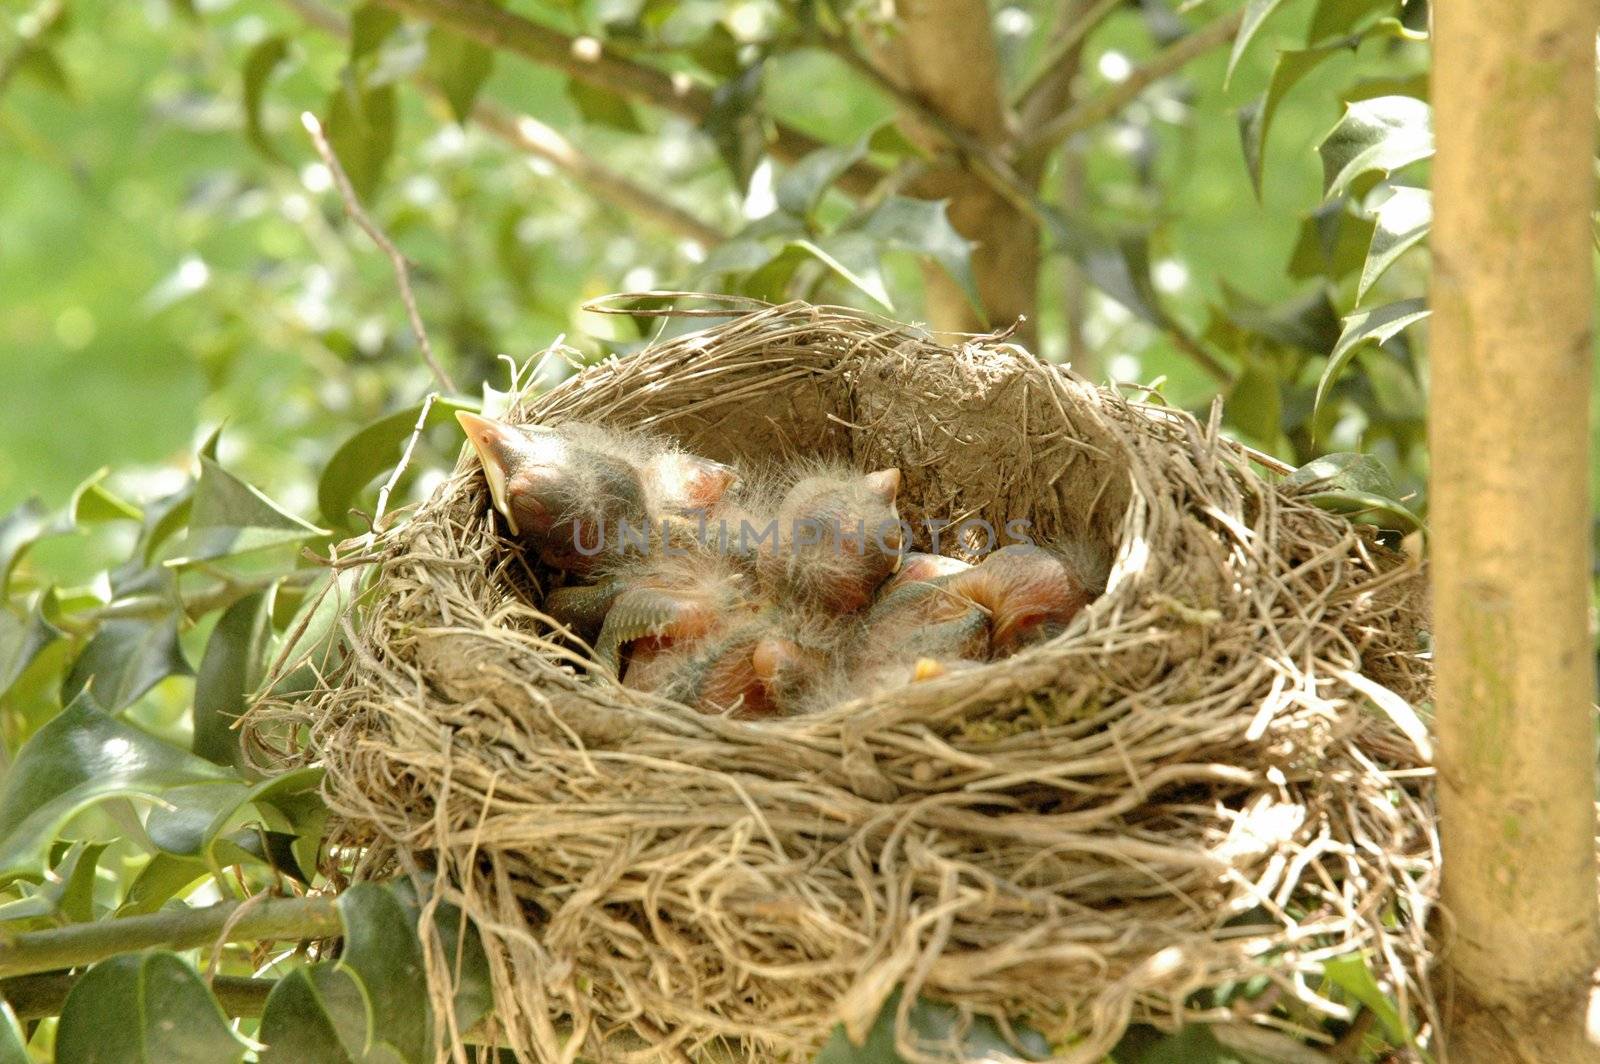 Hatchling baby birds in nest